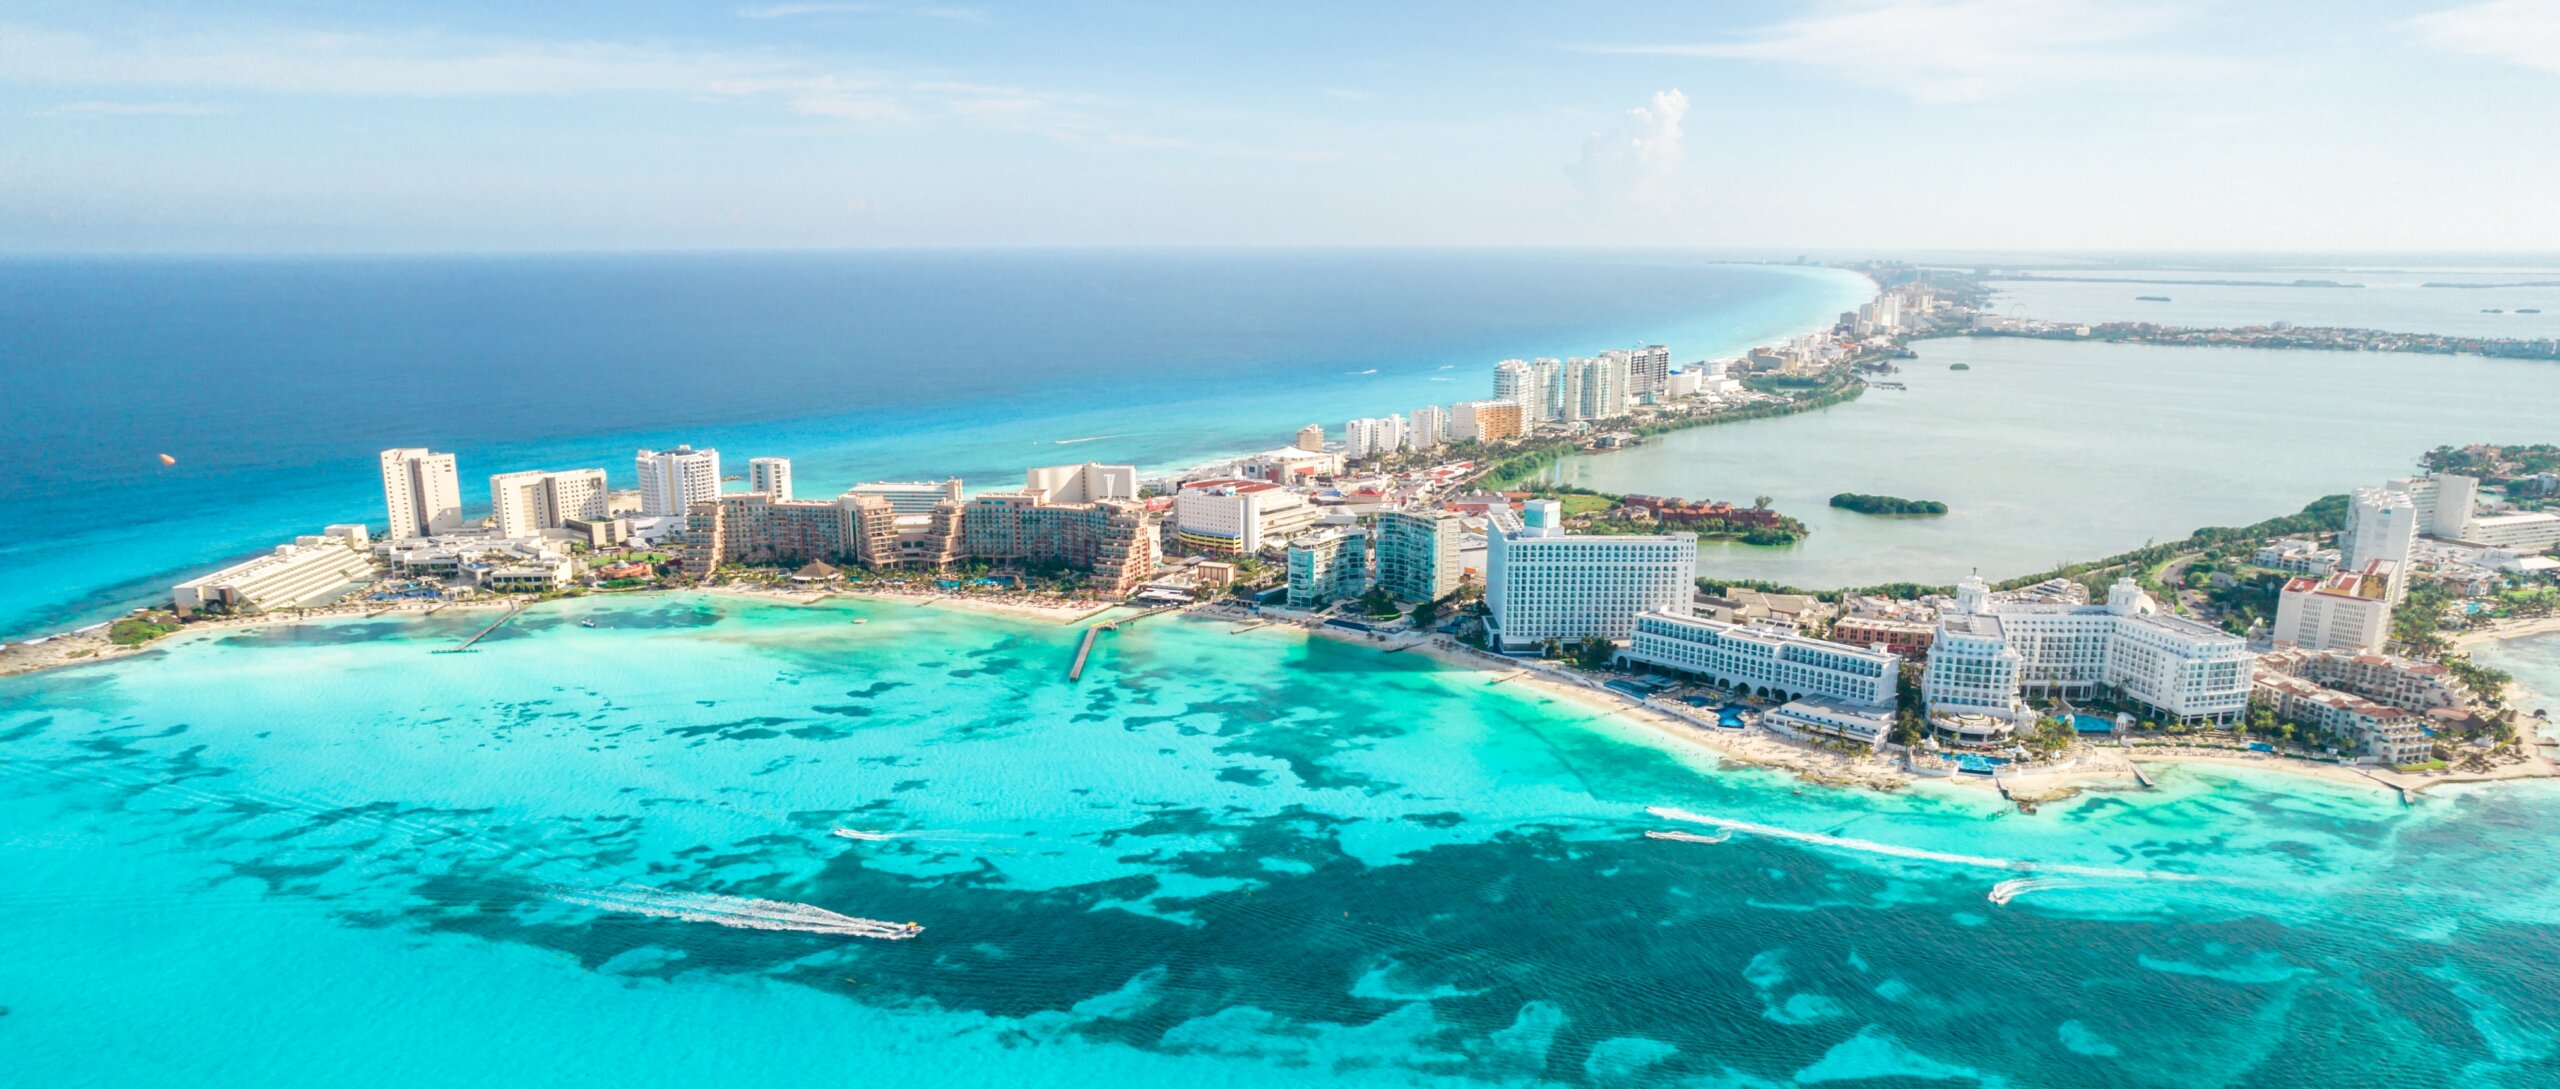 Aerial view of Cancun beach in Mexico. Caribbean coast landscape on Yucatan Peninsula